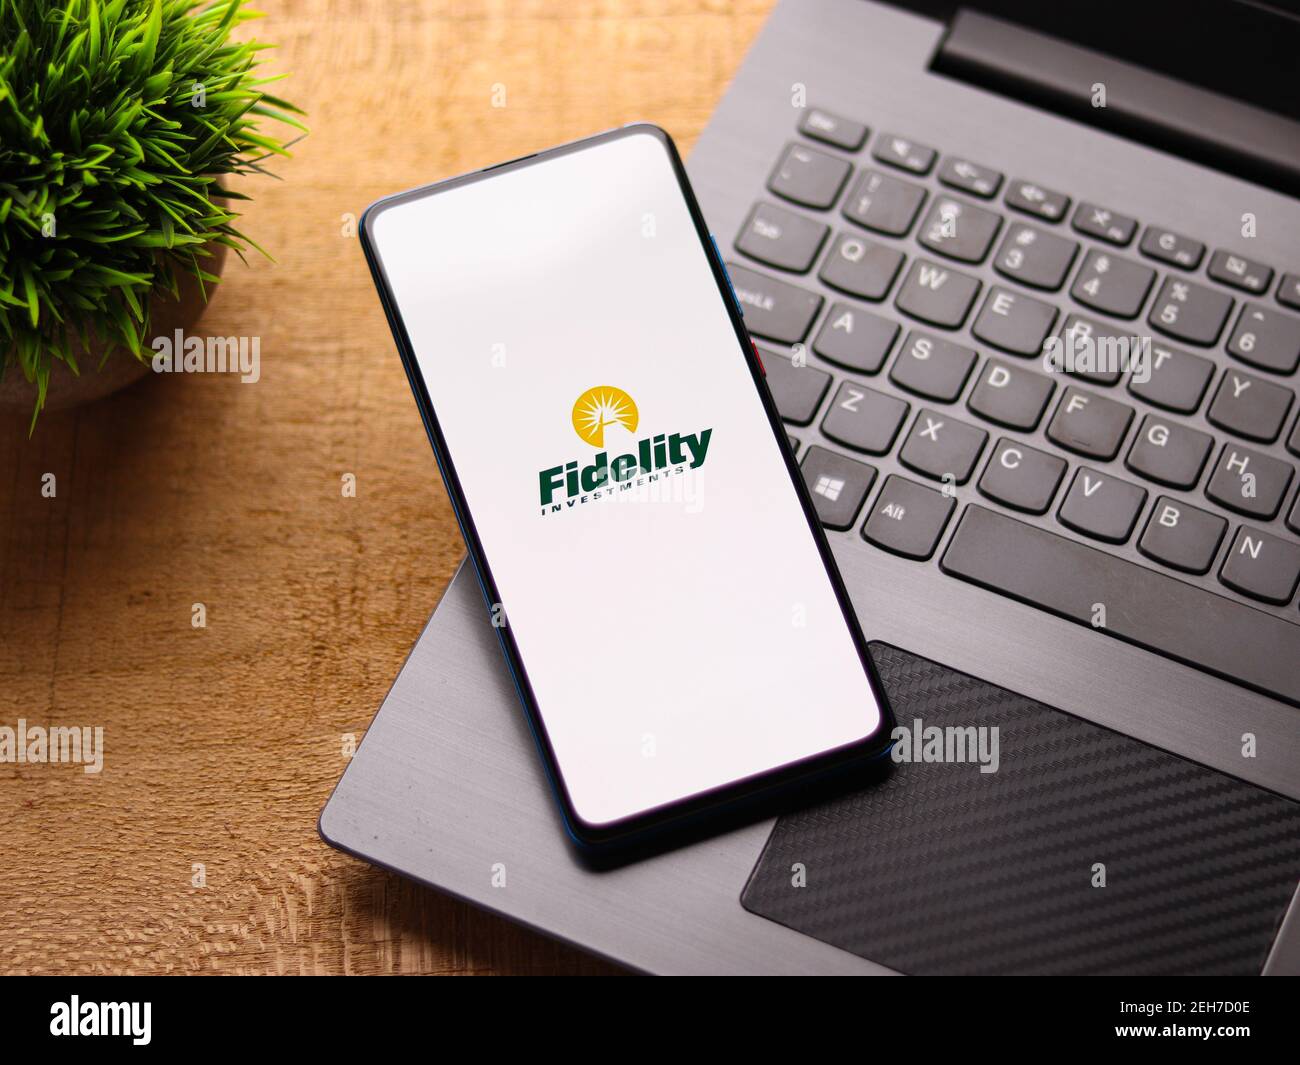 Assam, india - February 19, 2021 : Fidelity Investments logo on phone screen stock image. Stock Photo